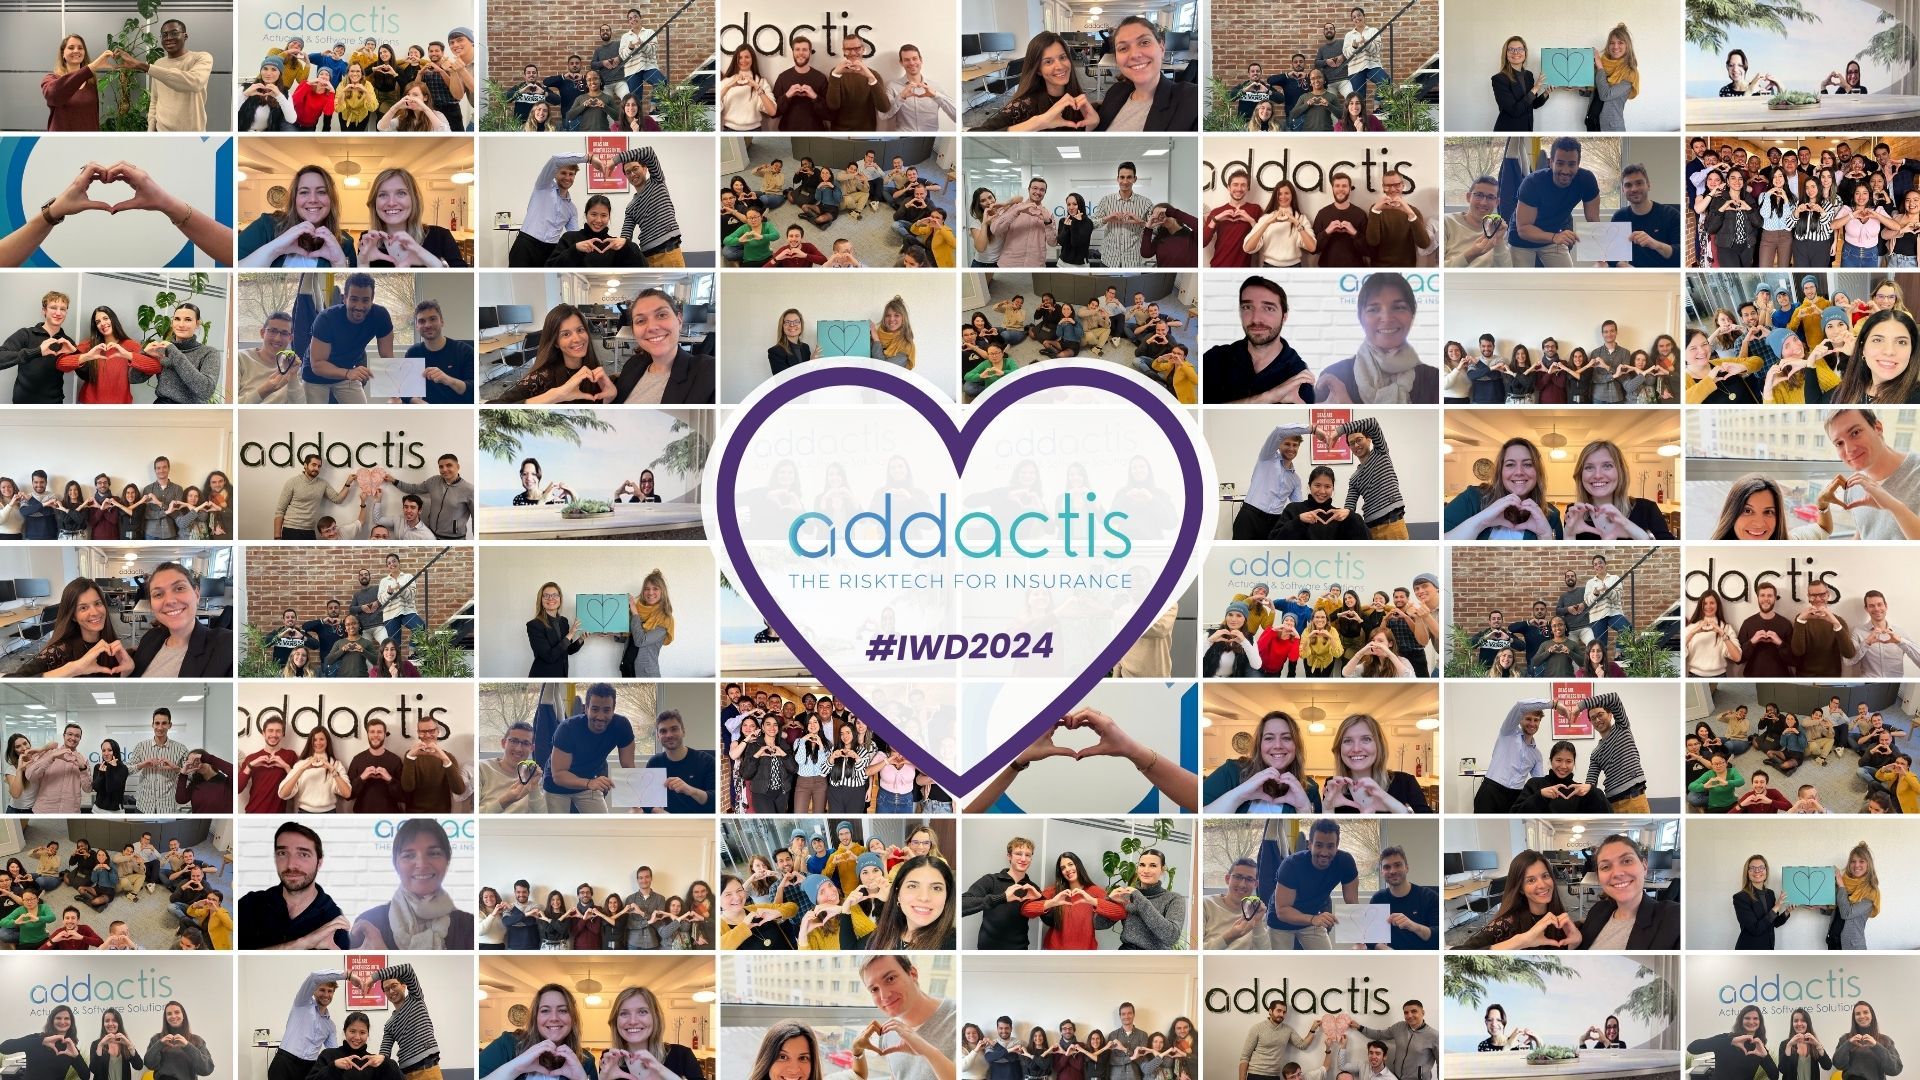 Addactis celebrates International Women's Rights Day